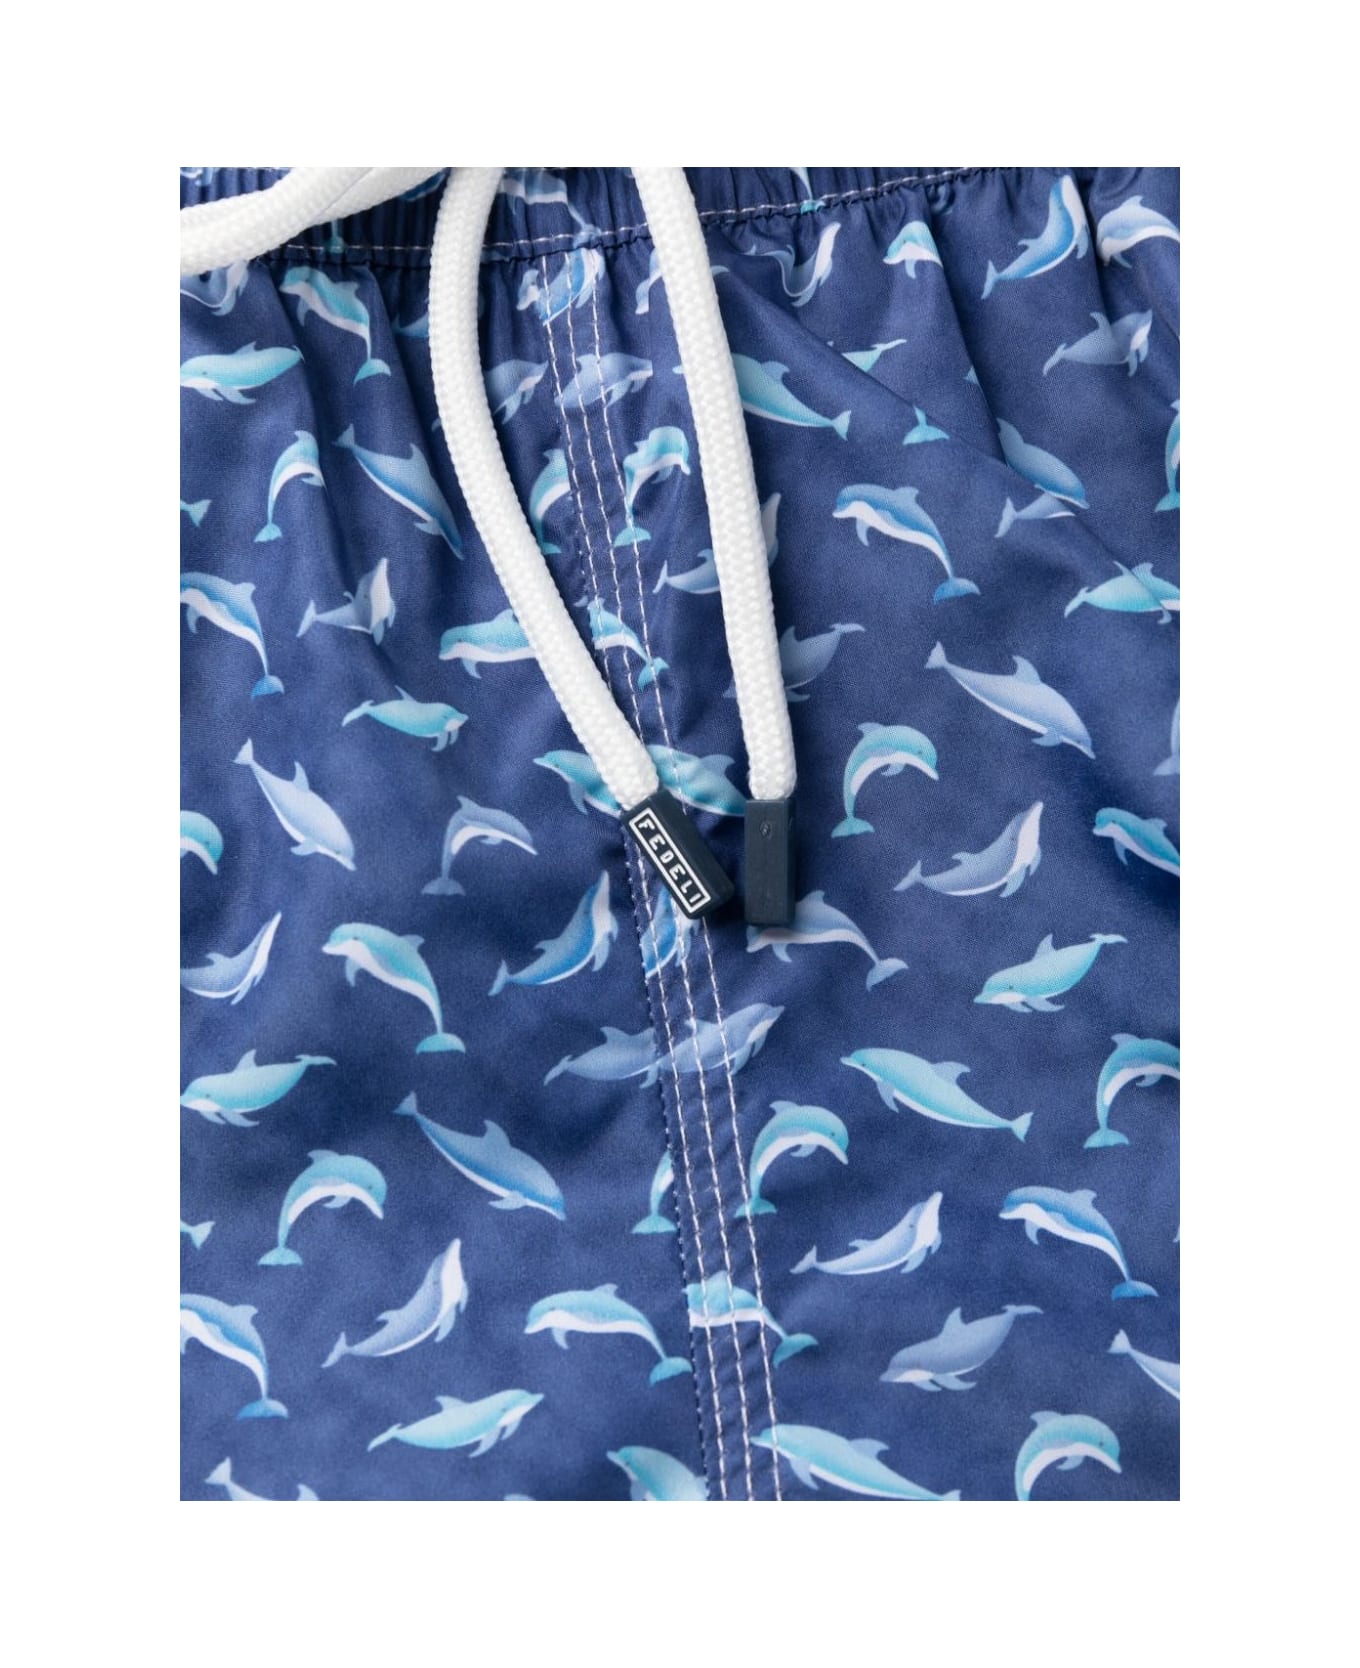 Fedeli Blue Swim Shorts With Light Blue Dolphin Pattern - Blue スイムトランクス